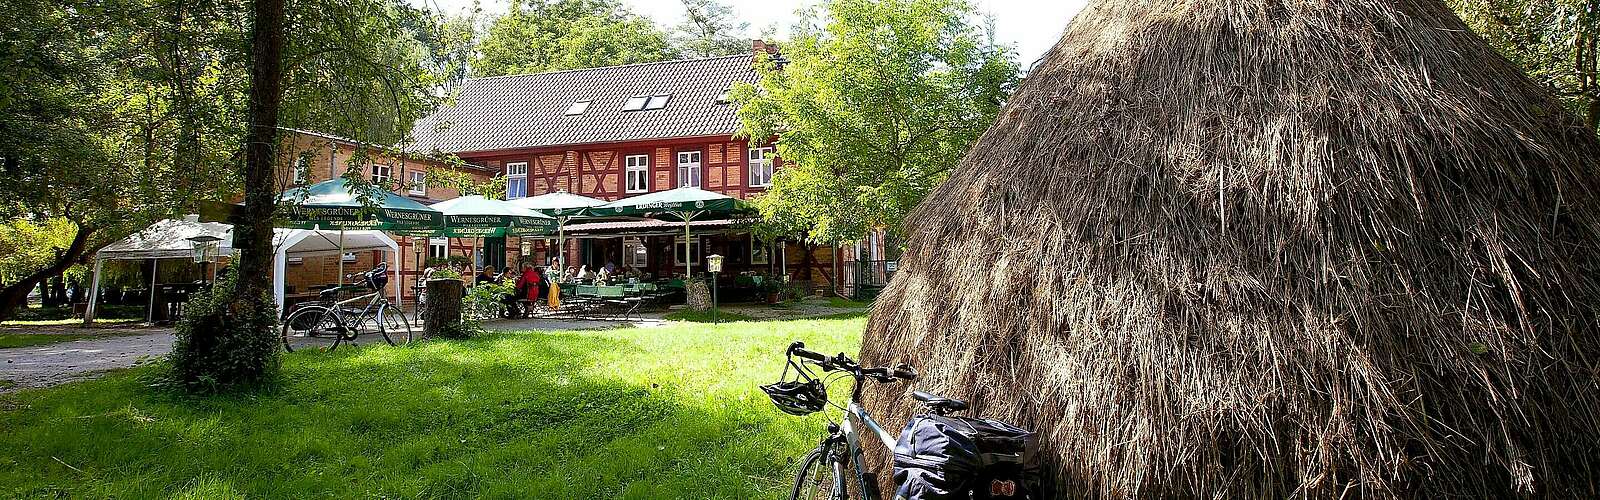 Hotel und Restaurant Dubkow-Mühle in Leipe,
        
    

        Foto: Fotograf / Lizenz - Media Import/Paul Hahn